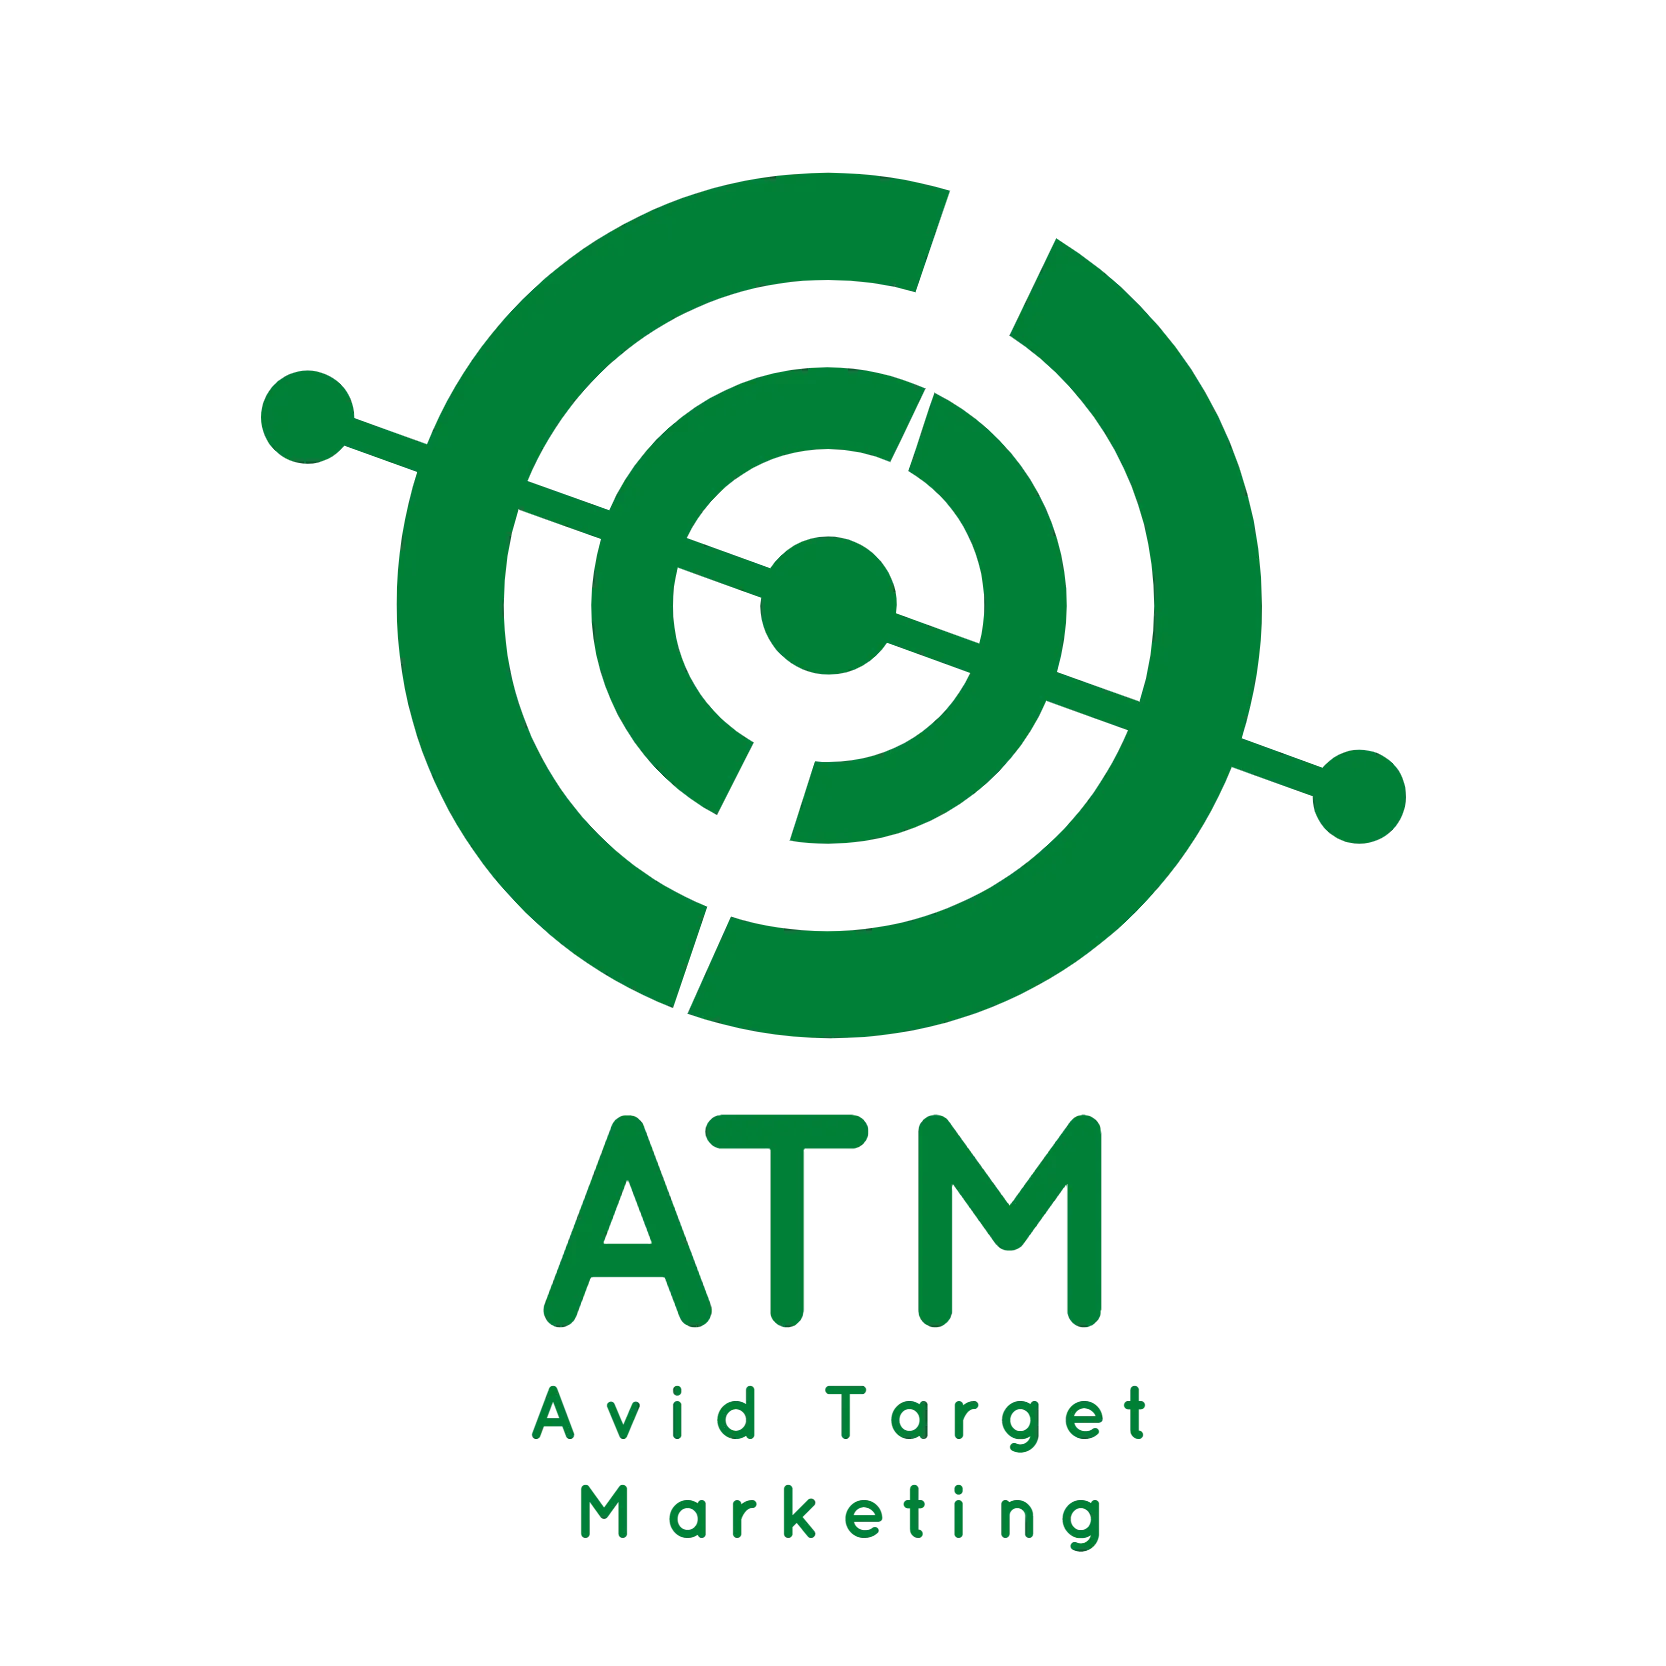 Avid Target Marketing Logo